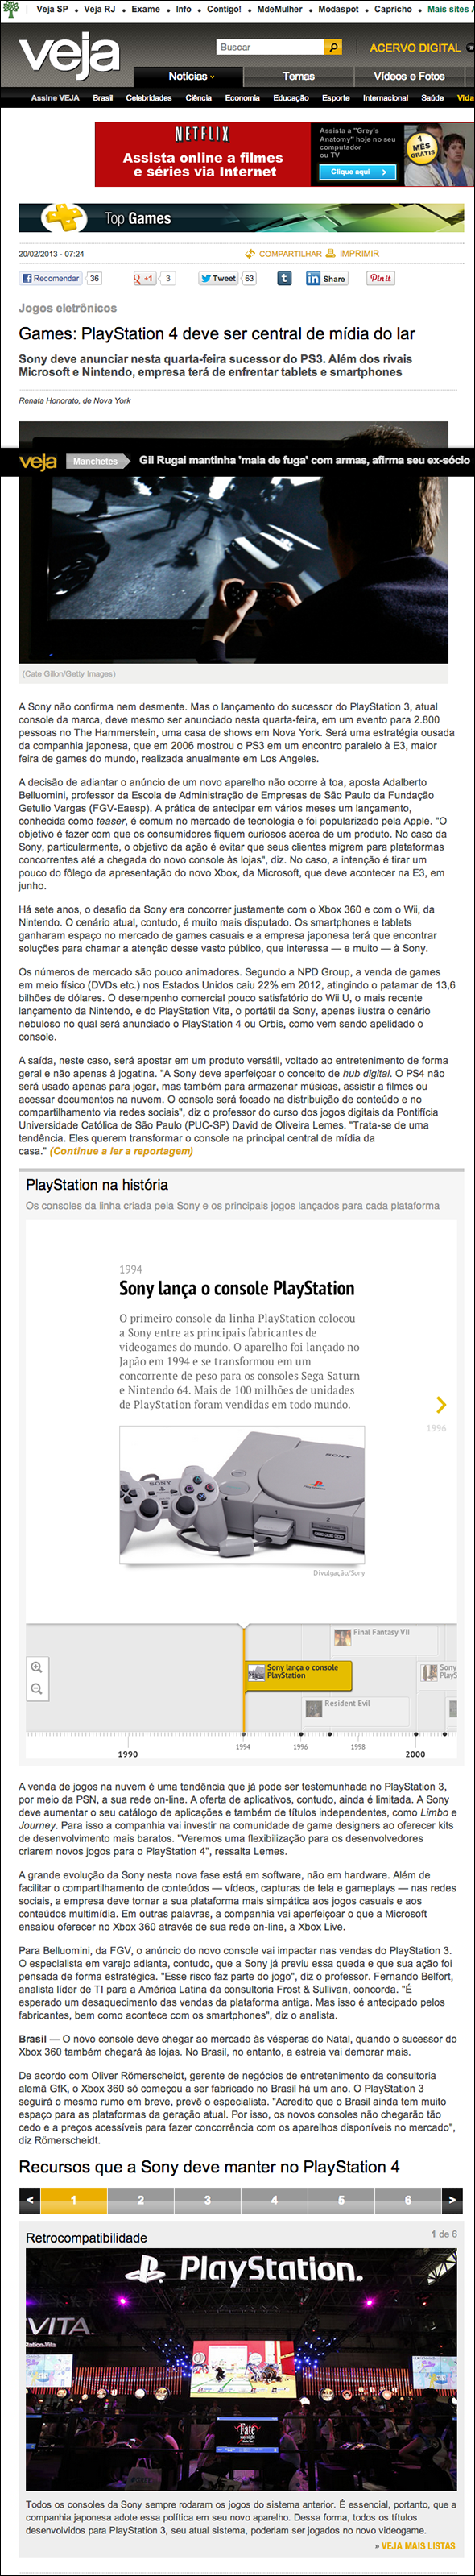 PlayStation 4 deve ser central de mídia do lar